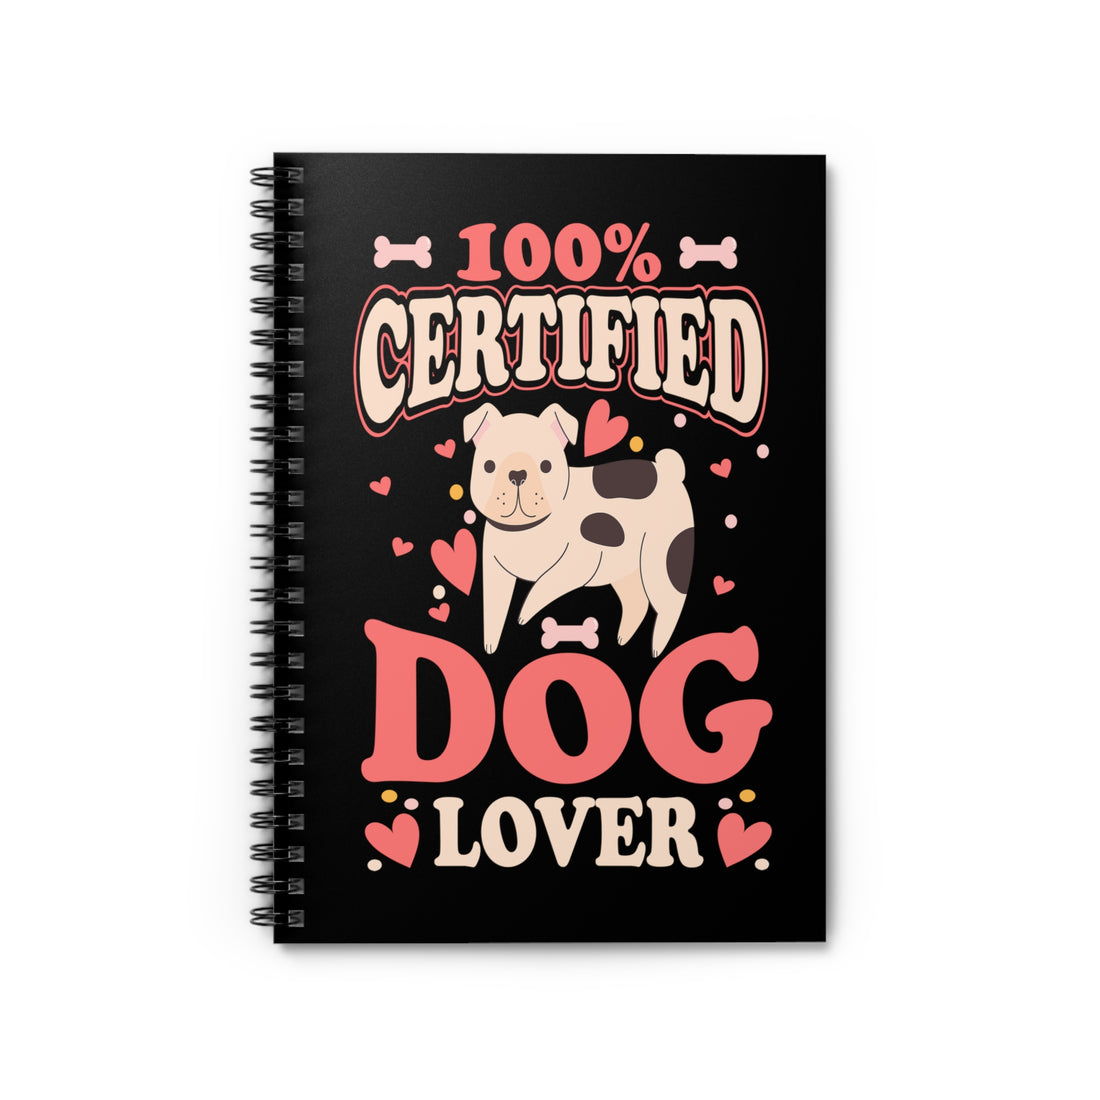 100% Certified Dog Lover - Spiral Notebook - Ruled Line